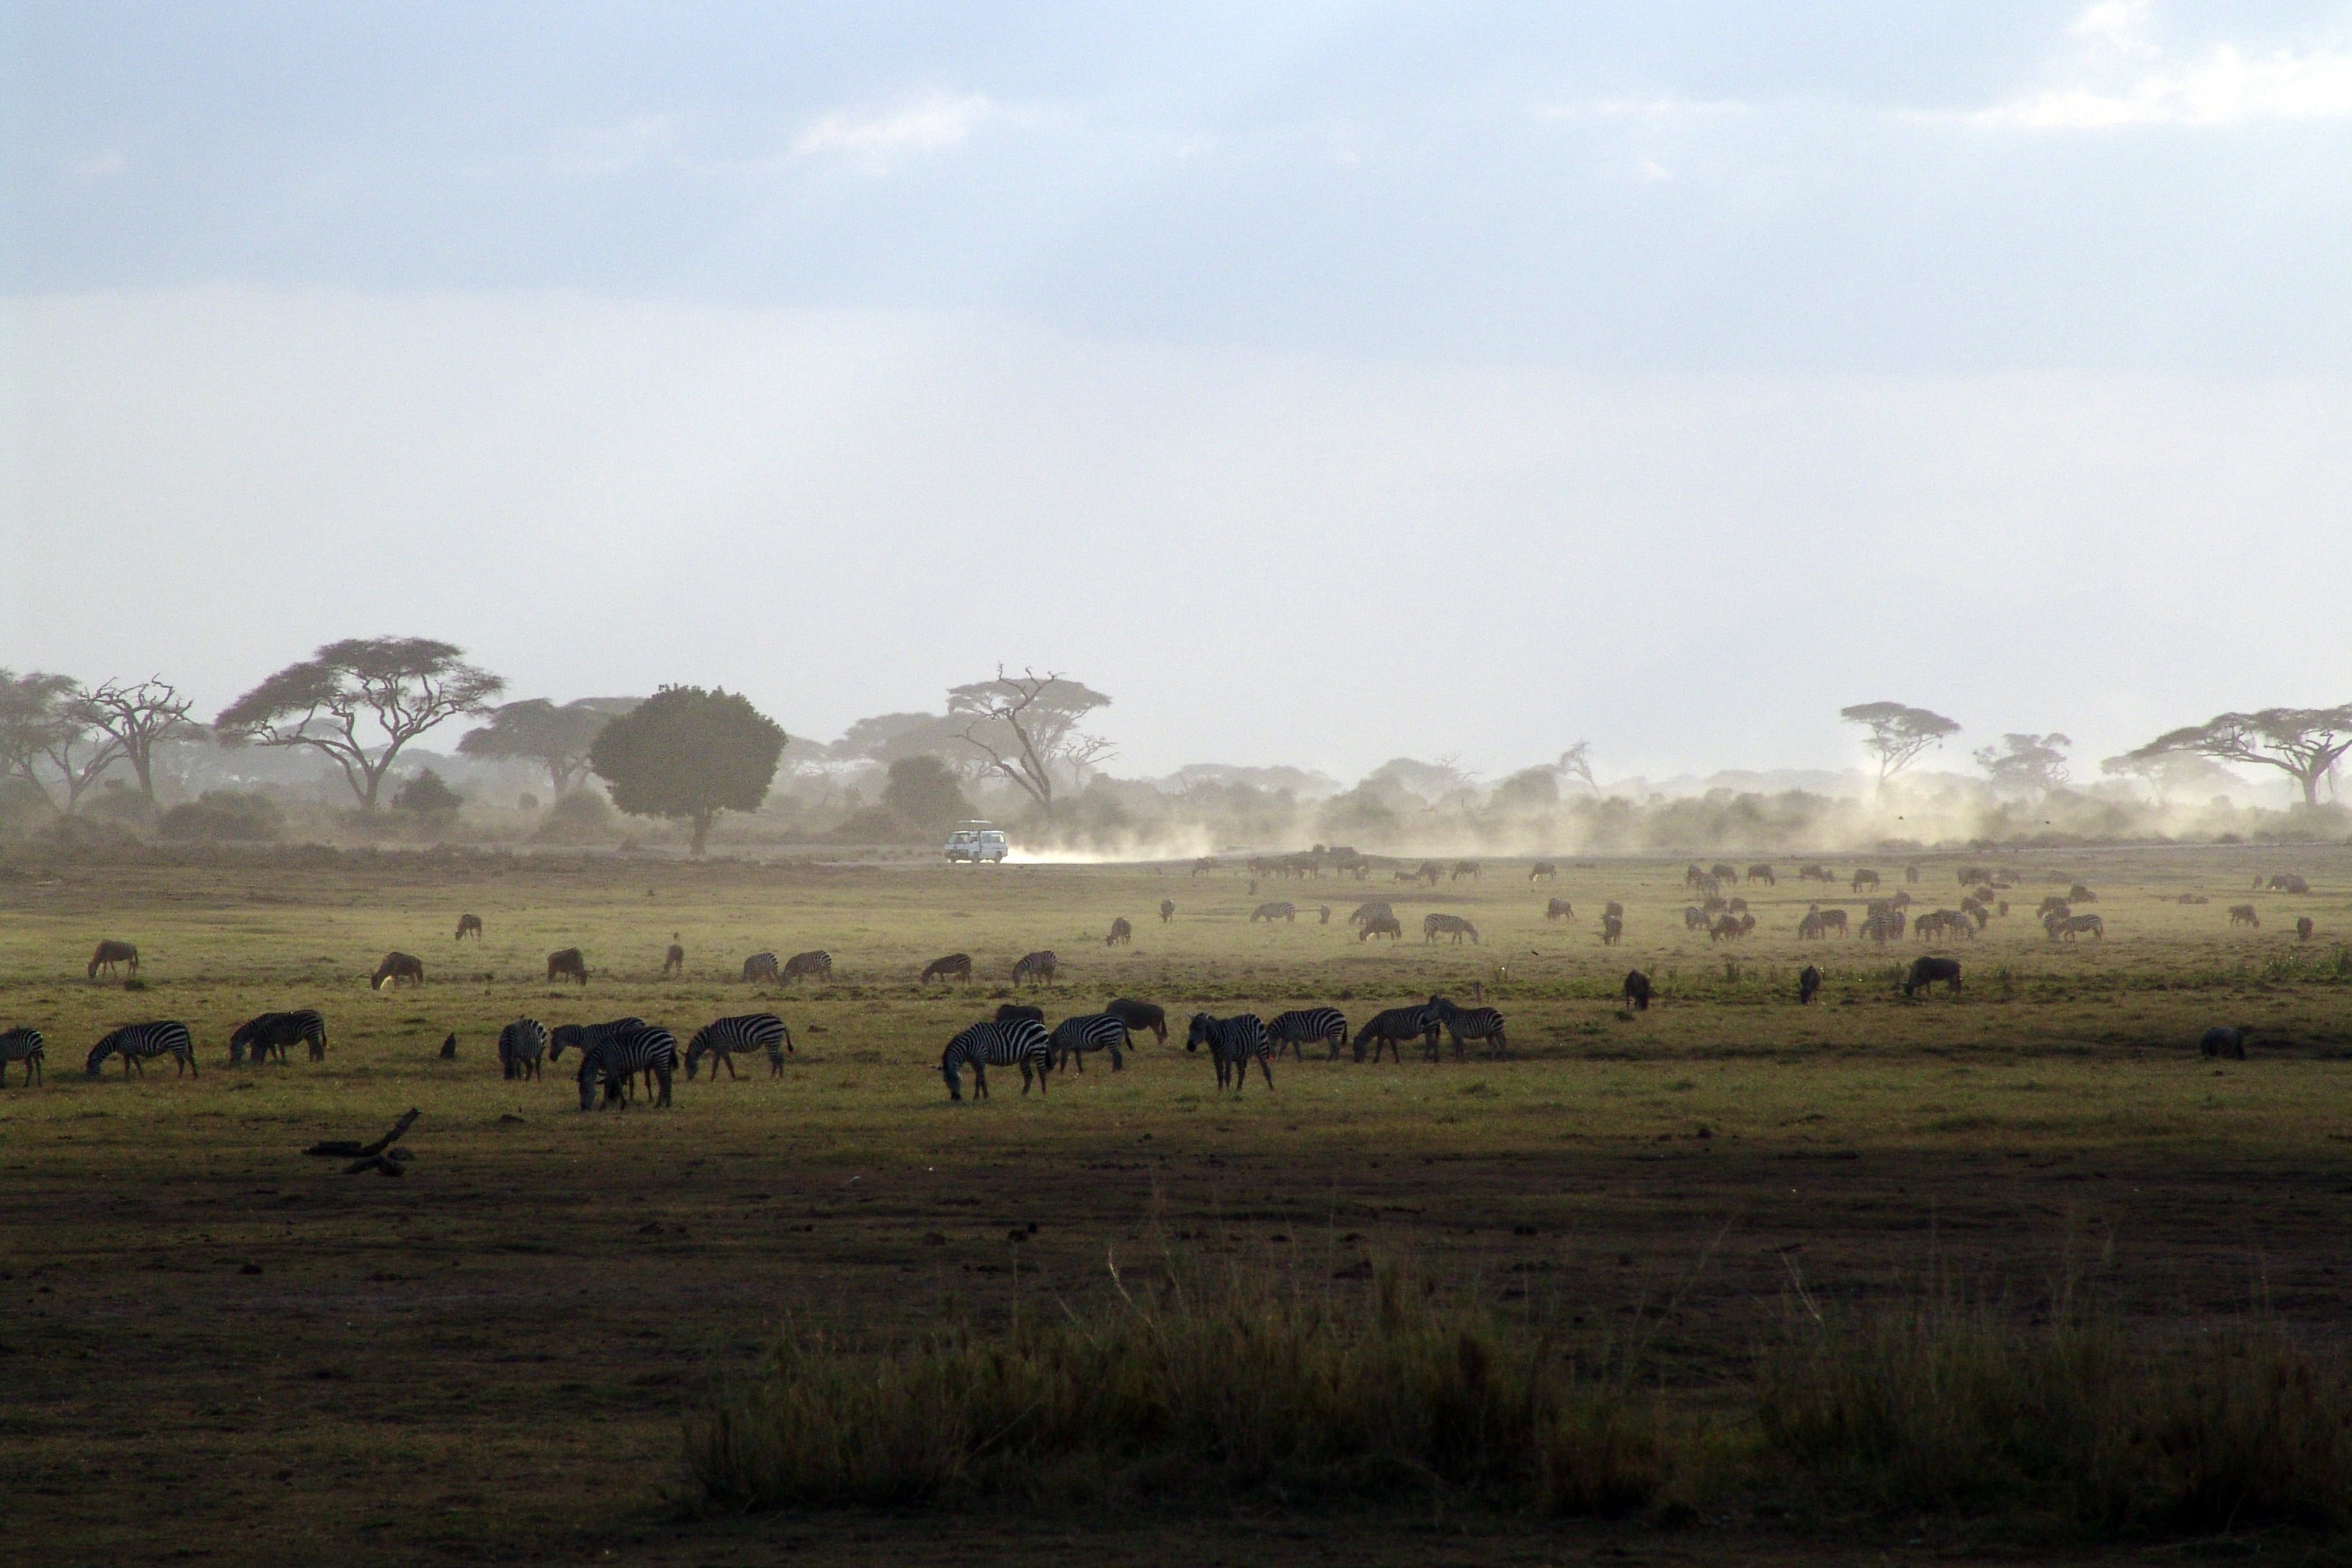 group of animals on grass field, safari, kenya, africa, national park